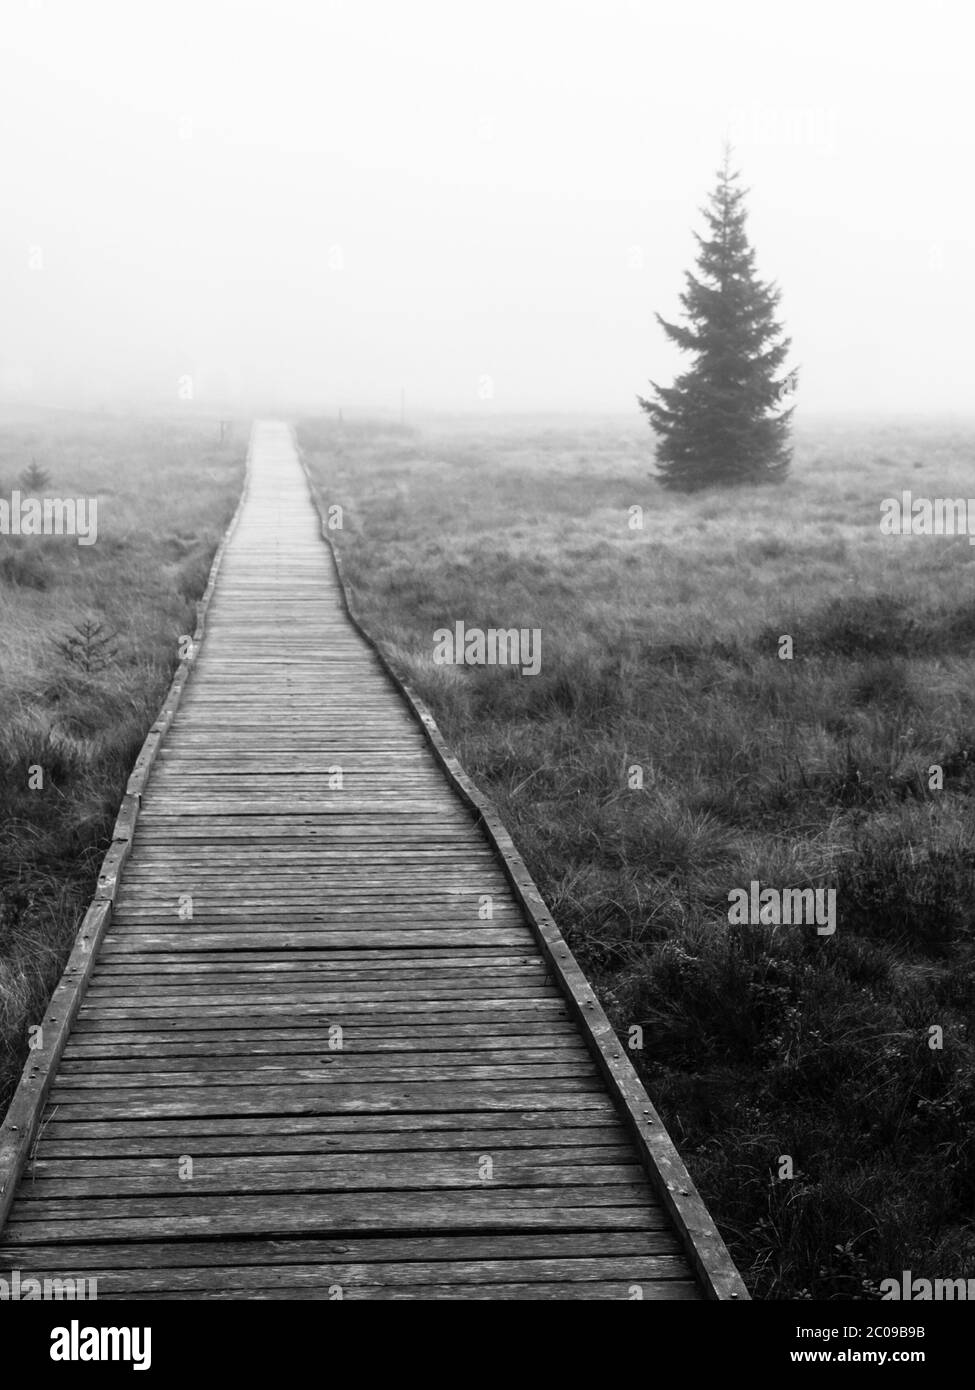 Wooden path in peat bog in black and white, Bozi Dar, Czech Republic, Europe. Bleak autumn landscape scene. Stock Photo